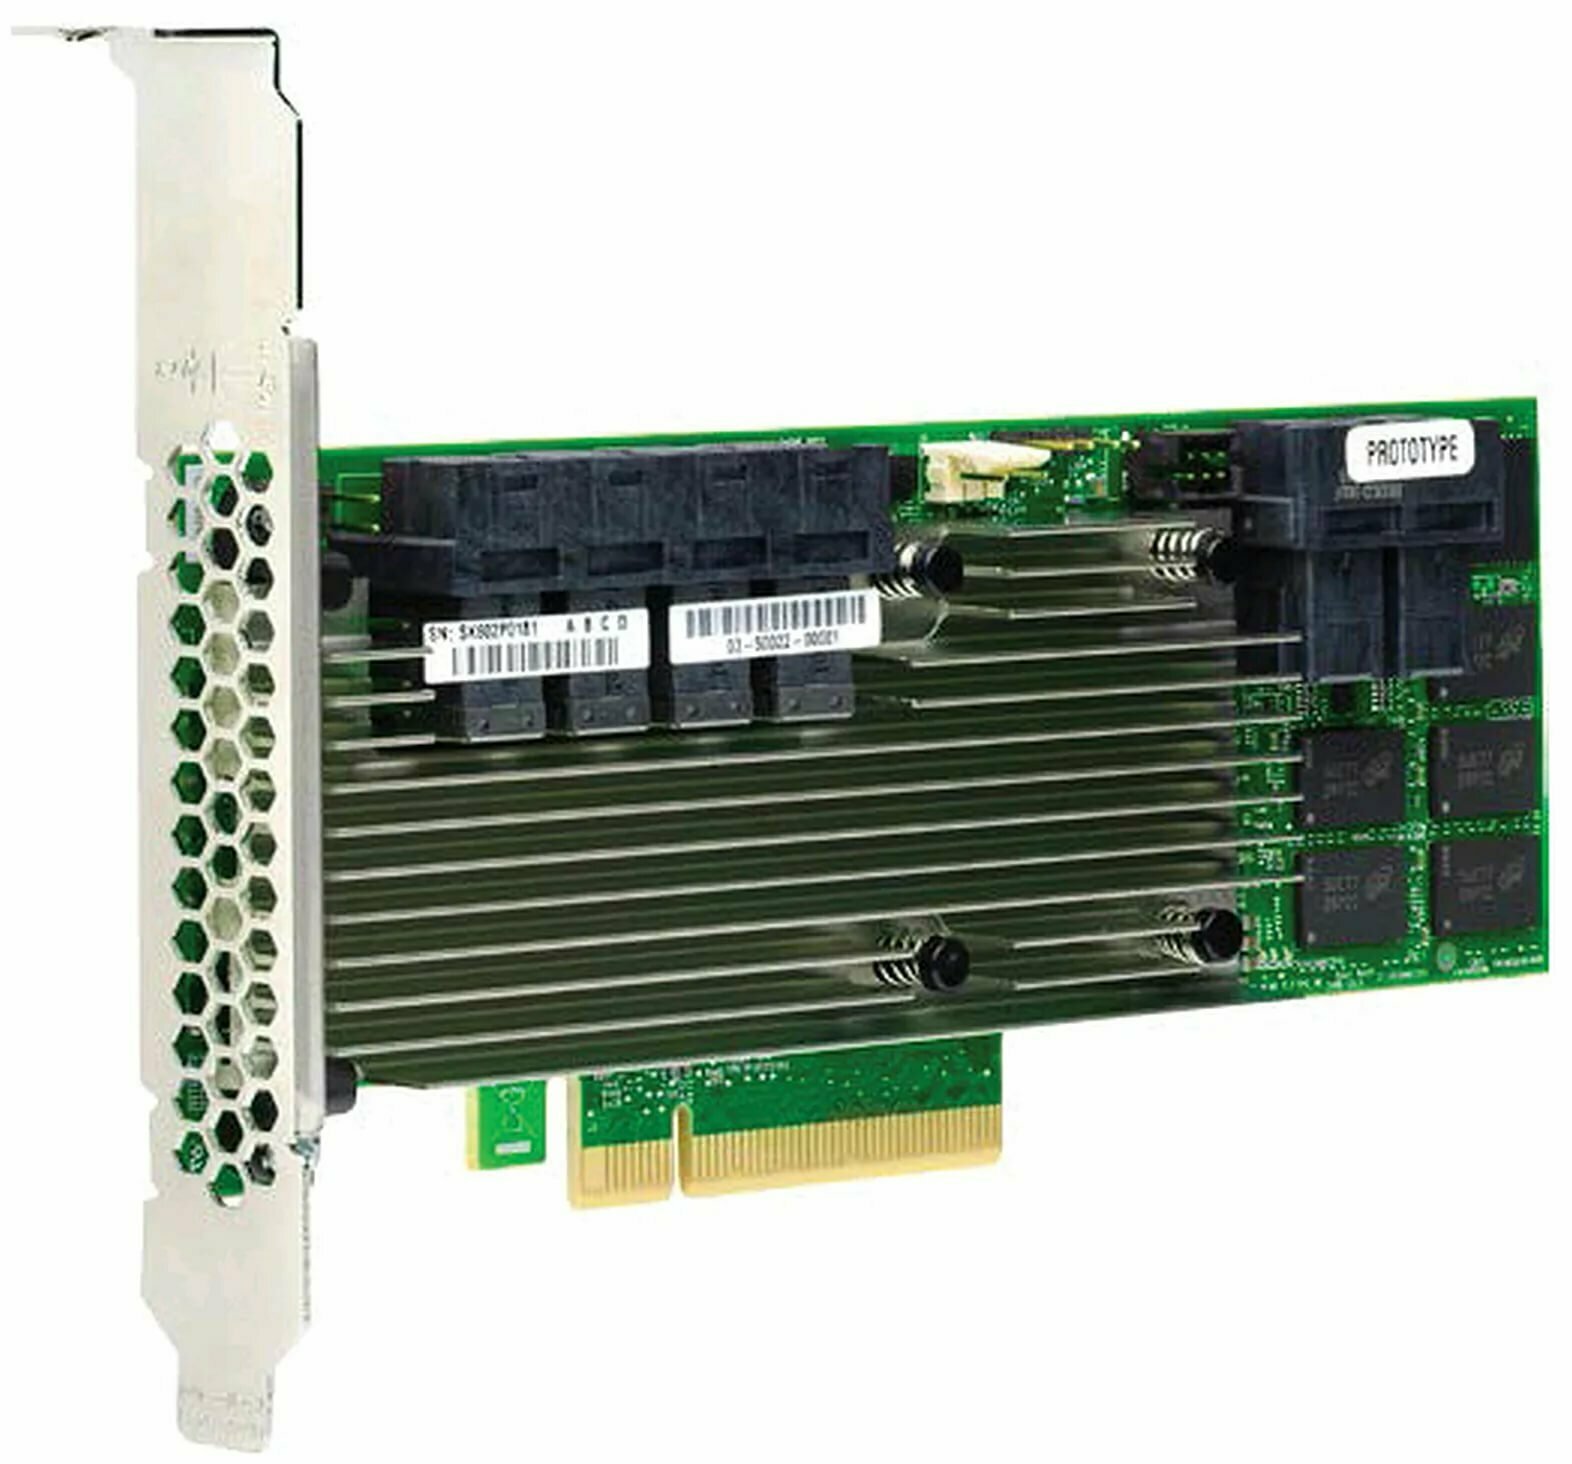 RAID LSI MegaRAID 9361-24i 05-50022-00/дисковые интерфейсы SAS,SATA/6x SFF8643/режимы RAID 0,1,10,5,50,6